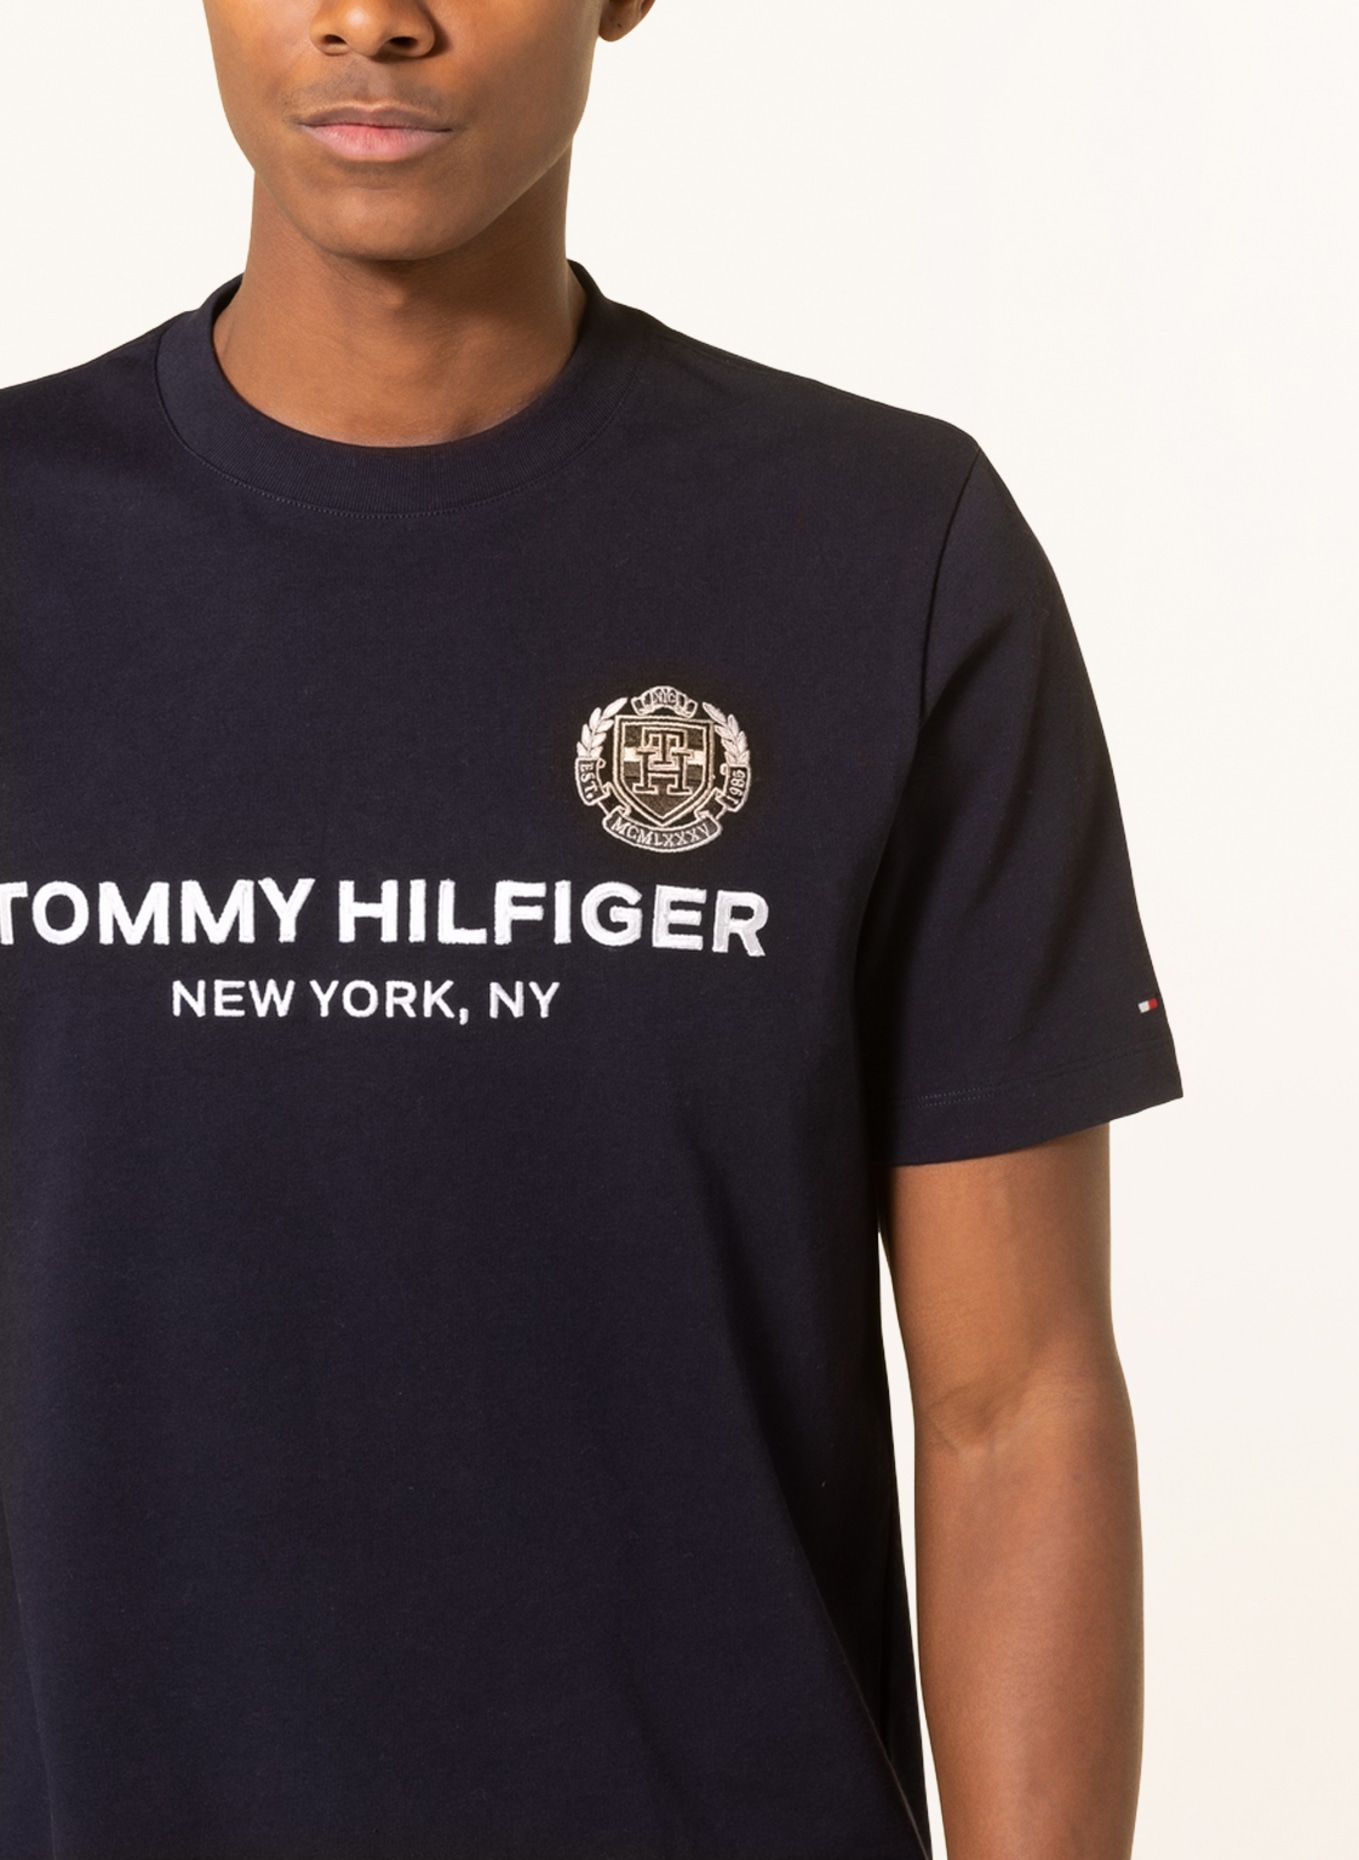 HILFIGER dunkelblau in TOMMY T-Shirt